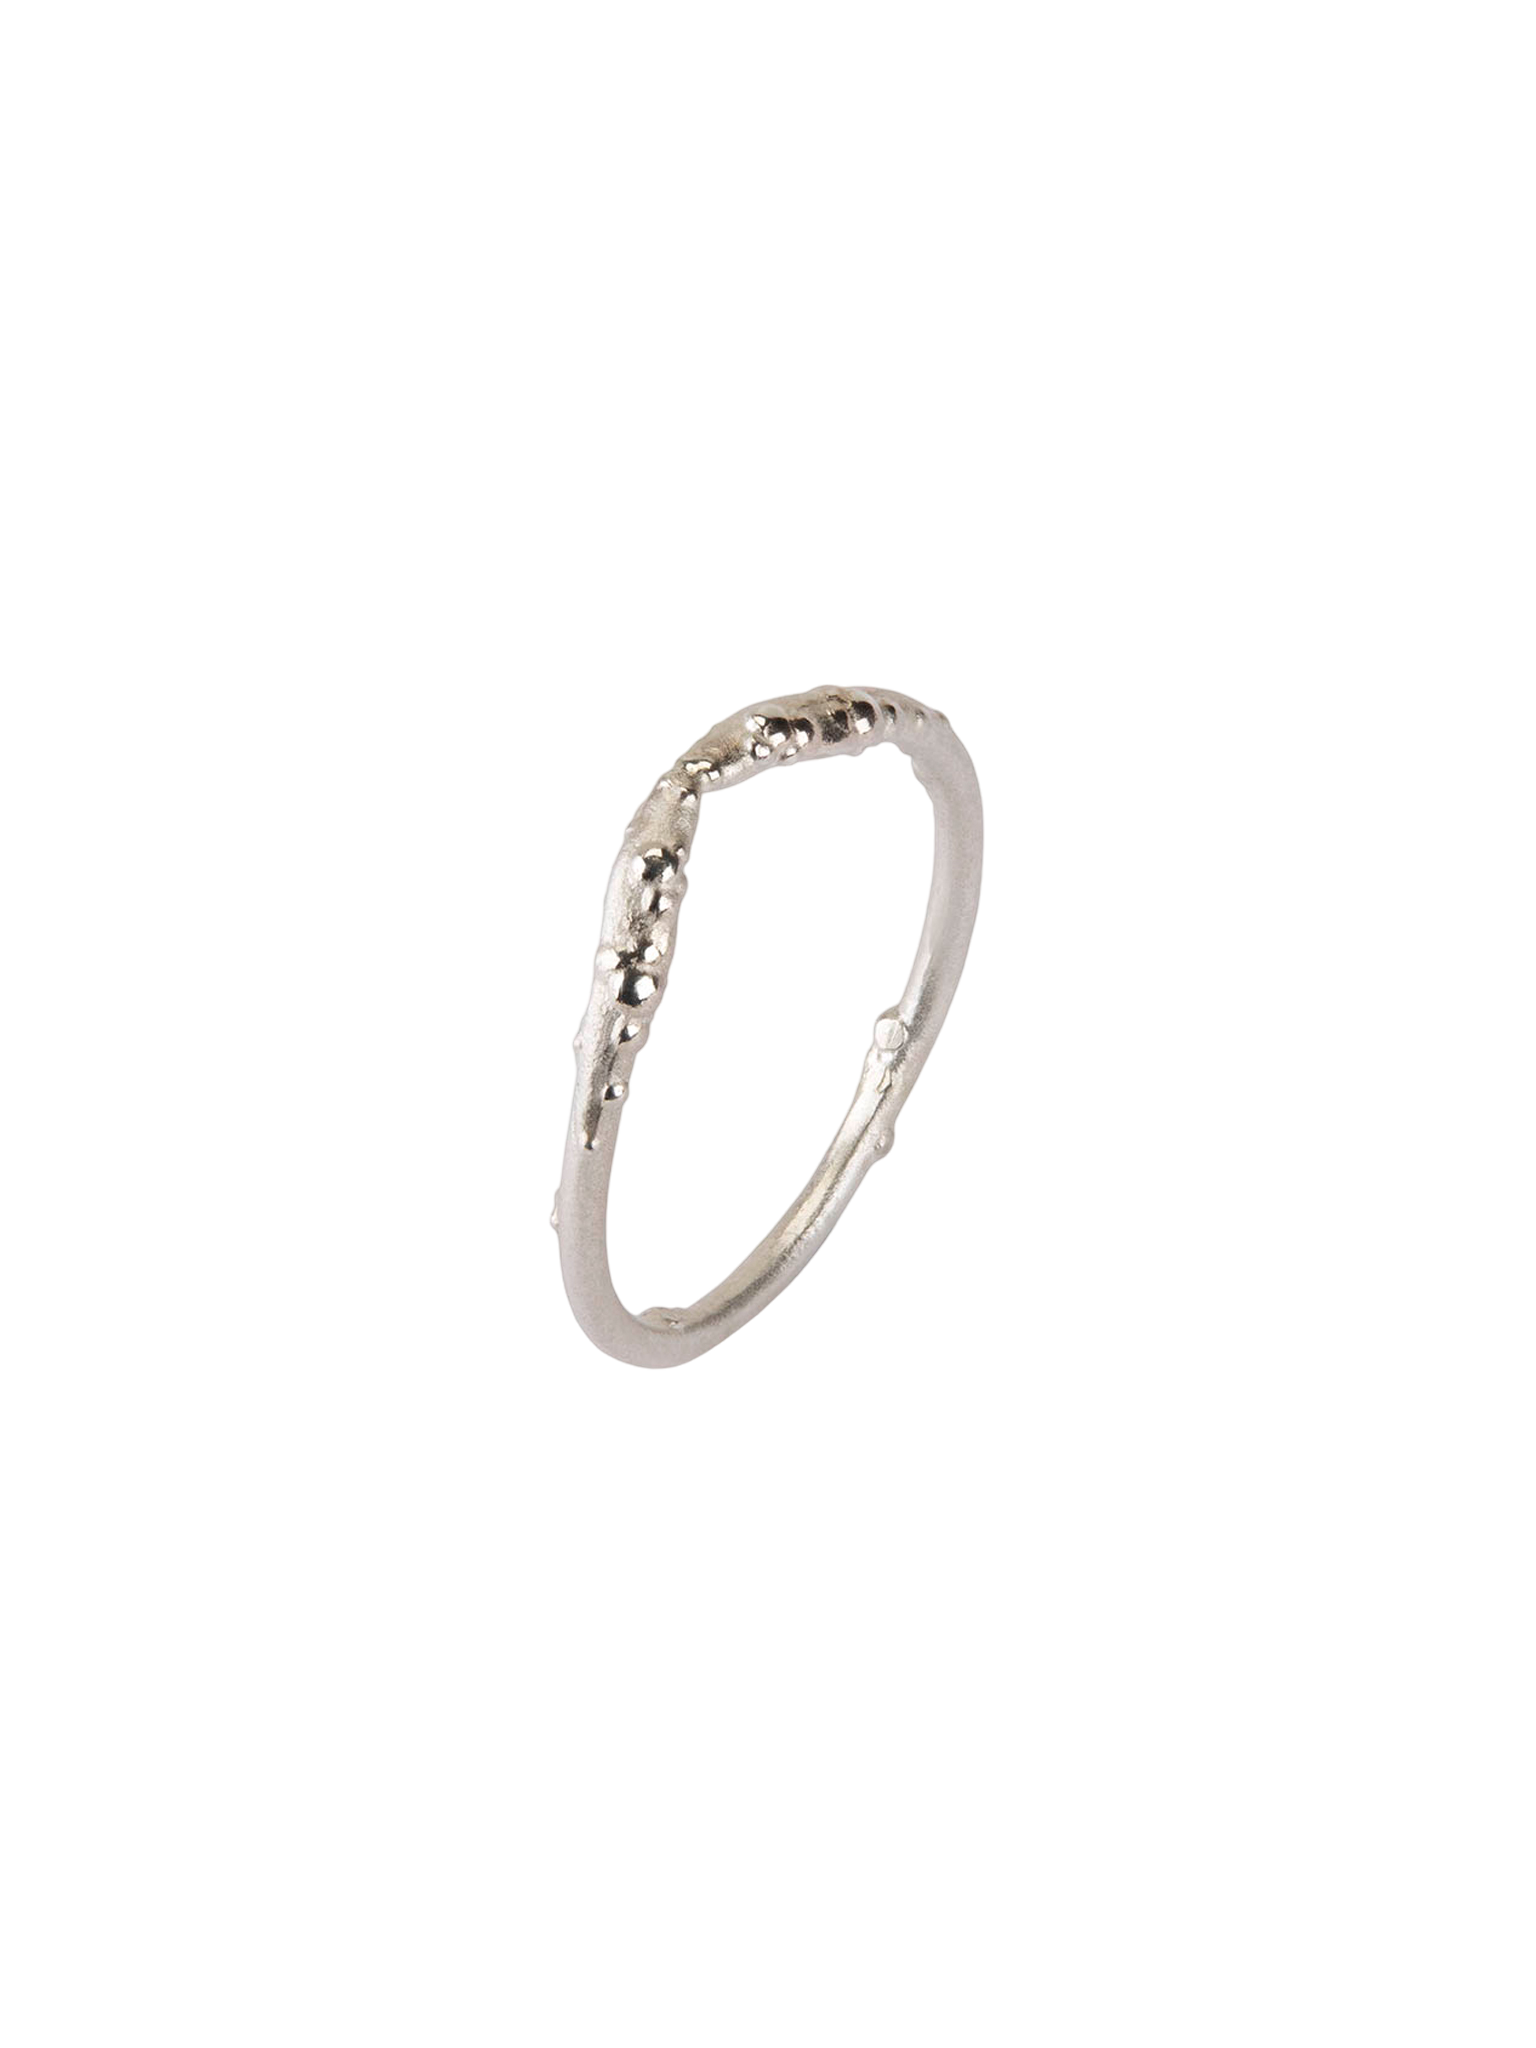 Orno v shape stacking ring